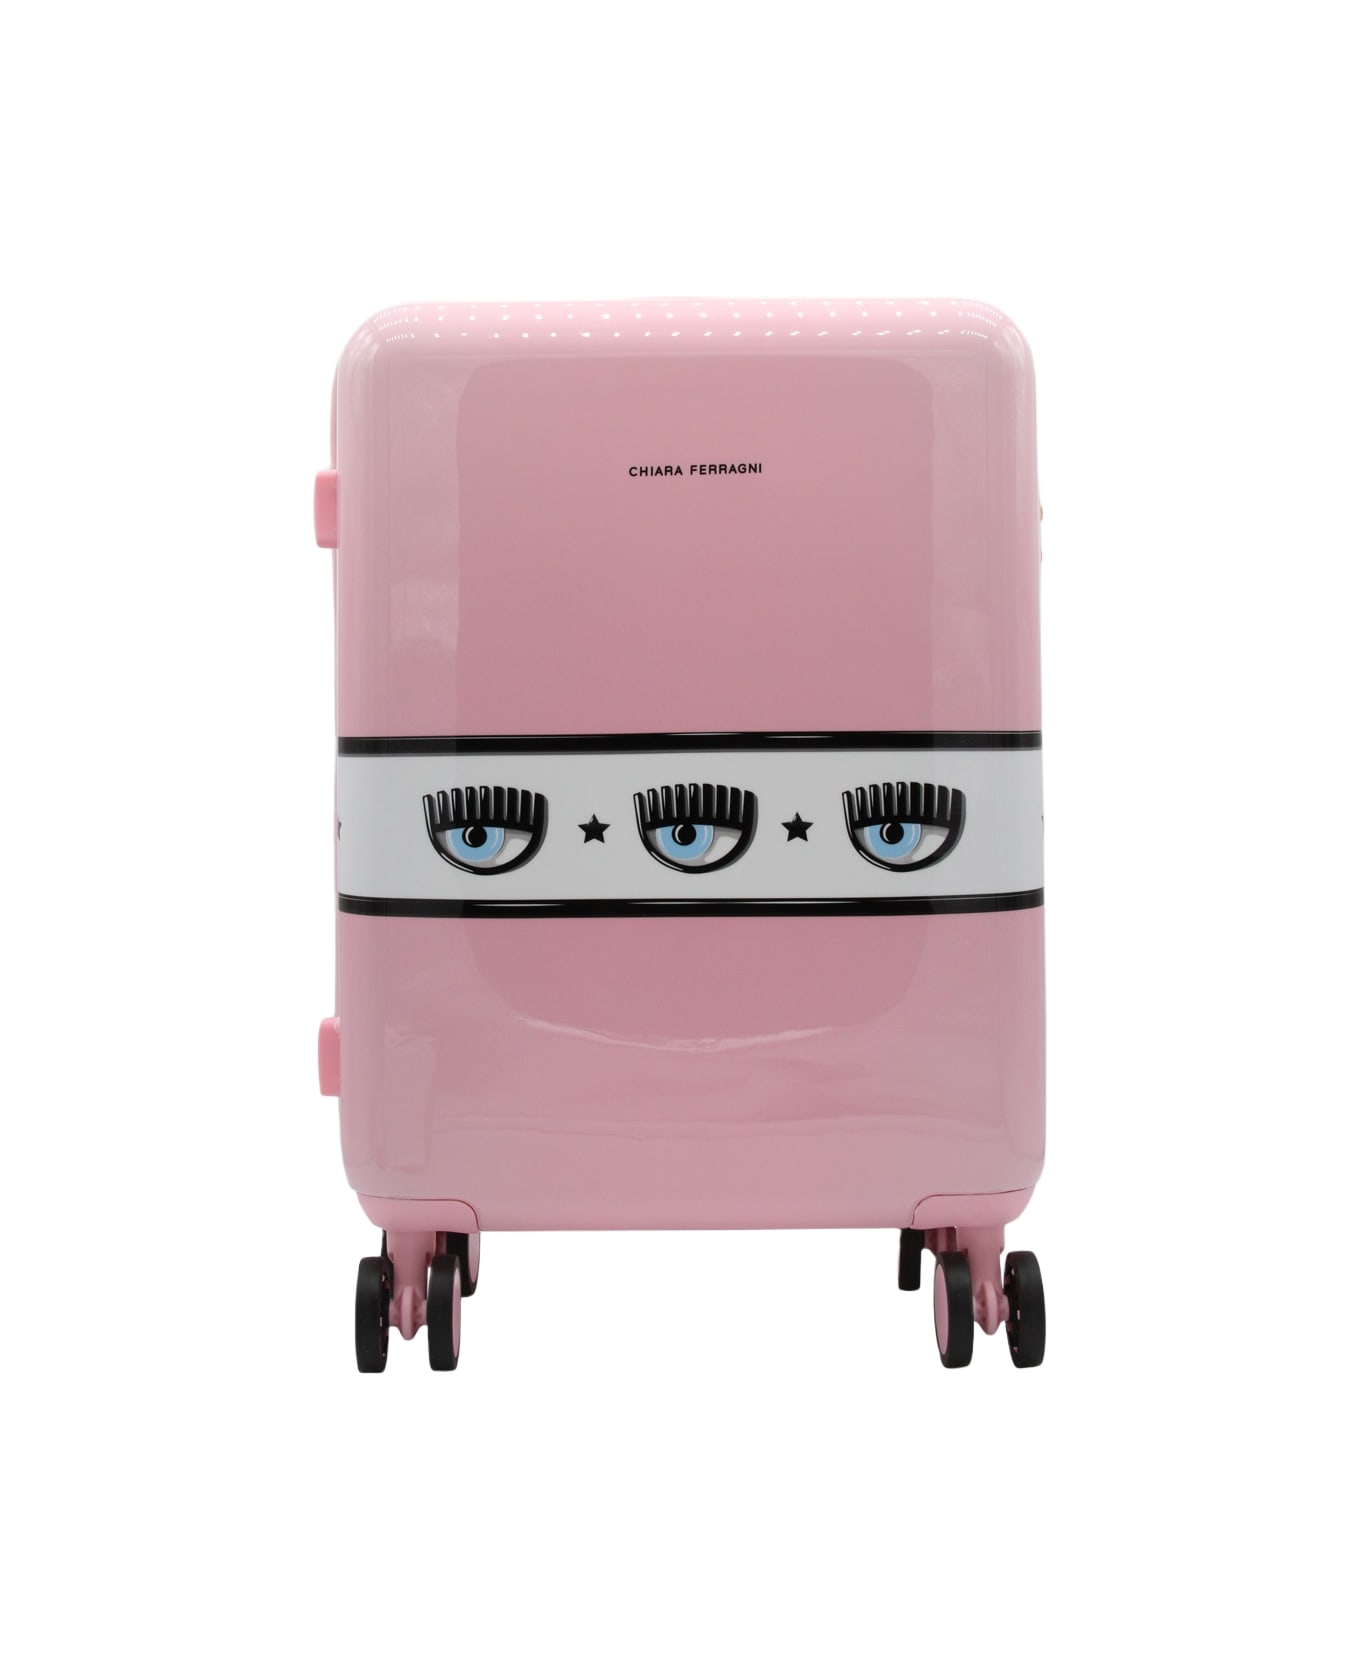 Chiara Ferragni Pink Cabin Suitcase - Pink